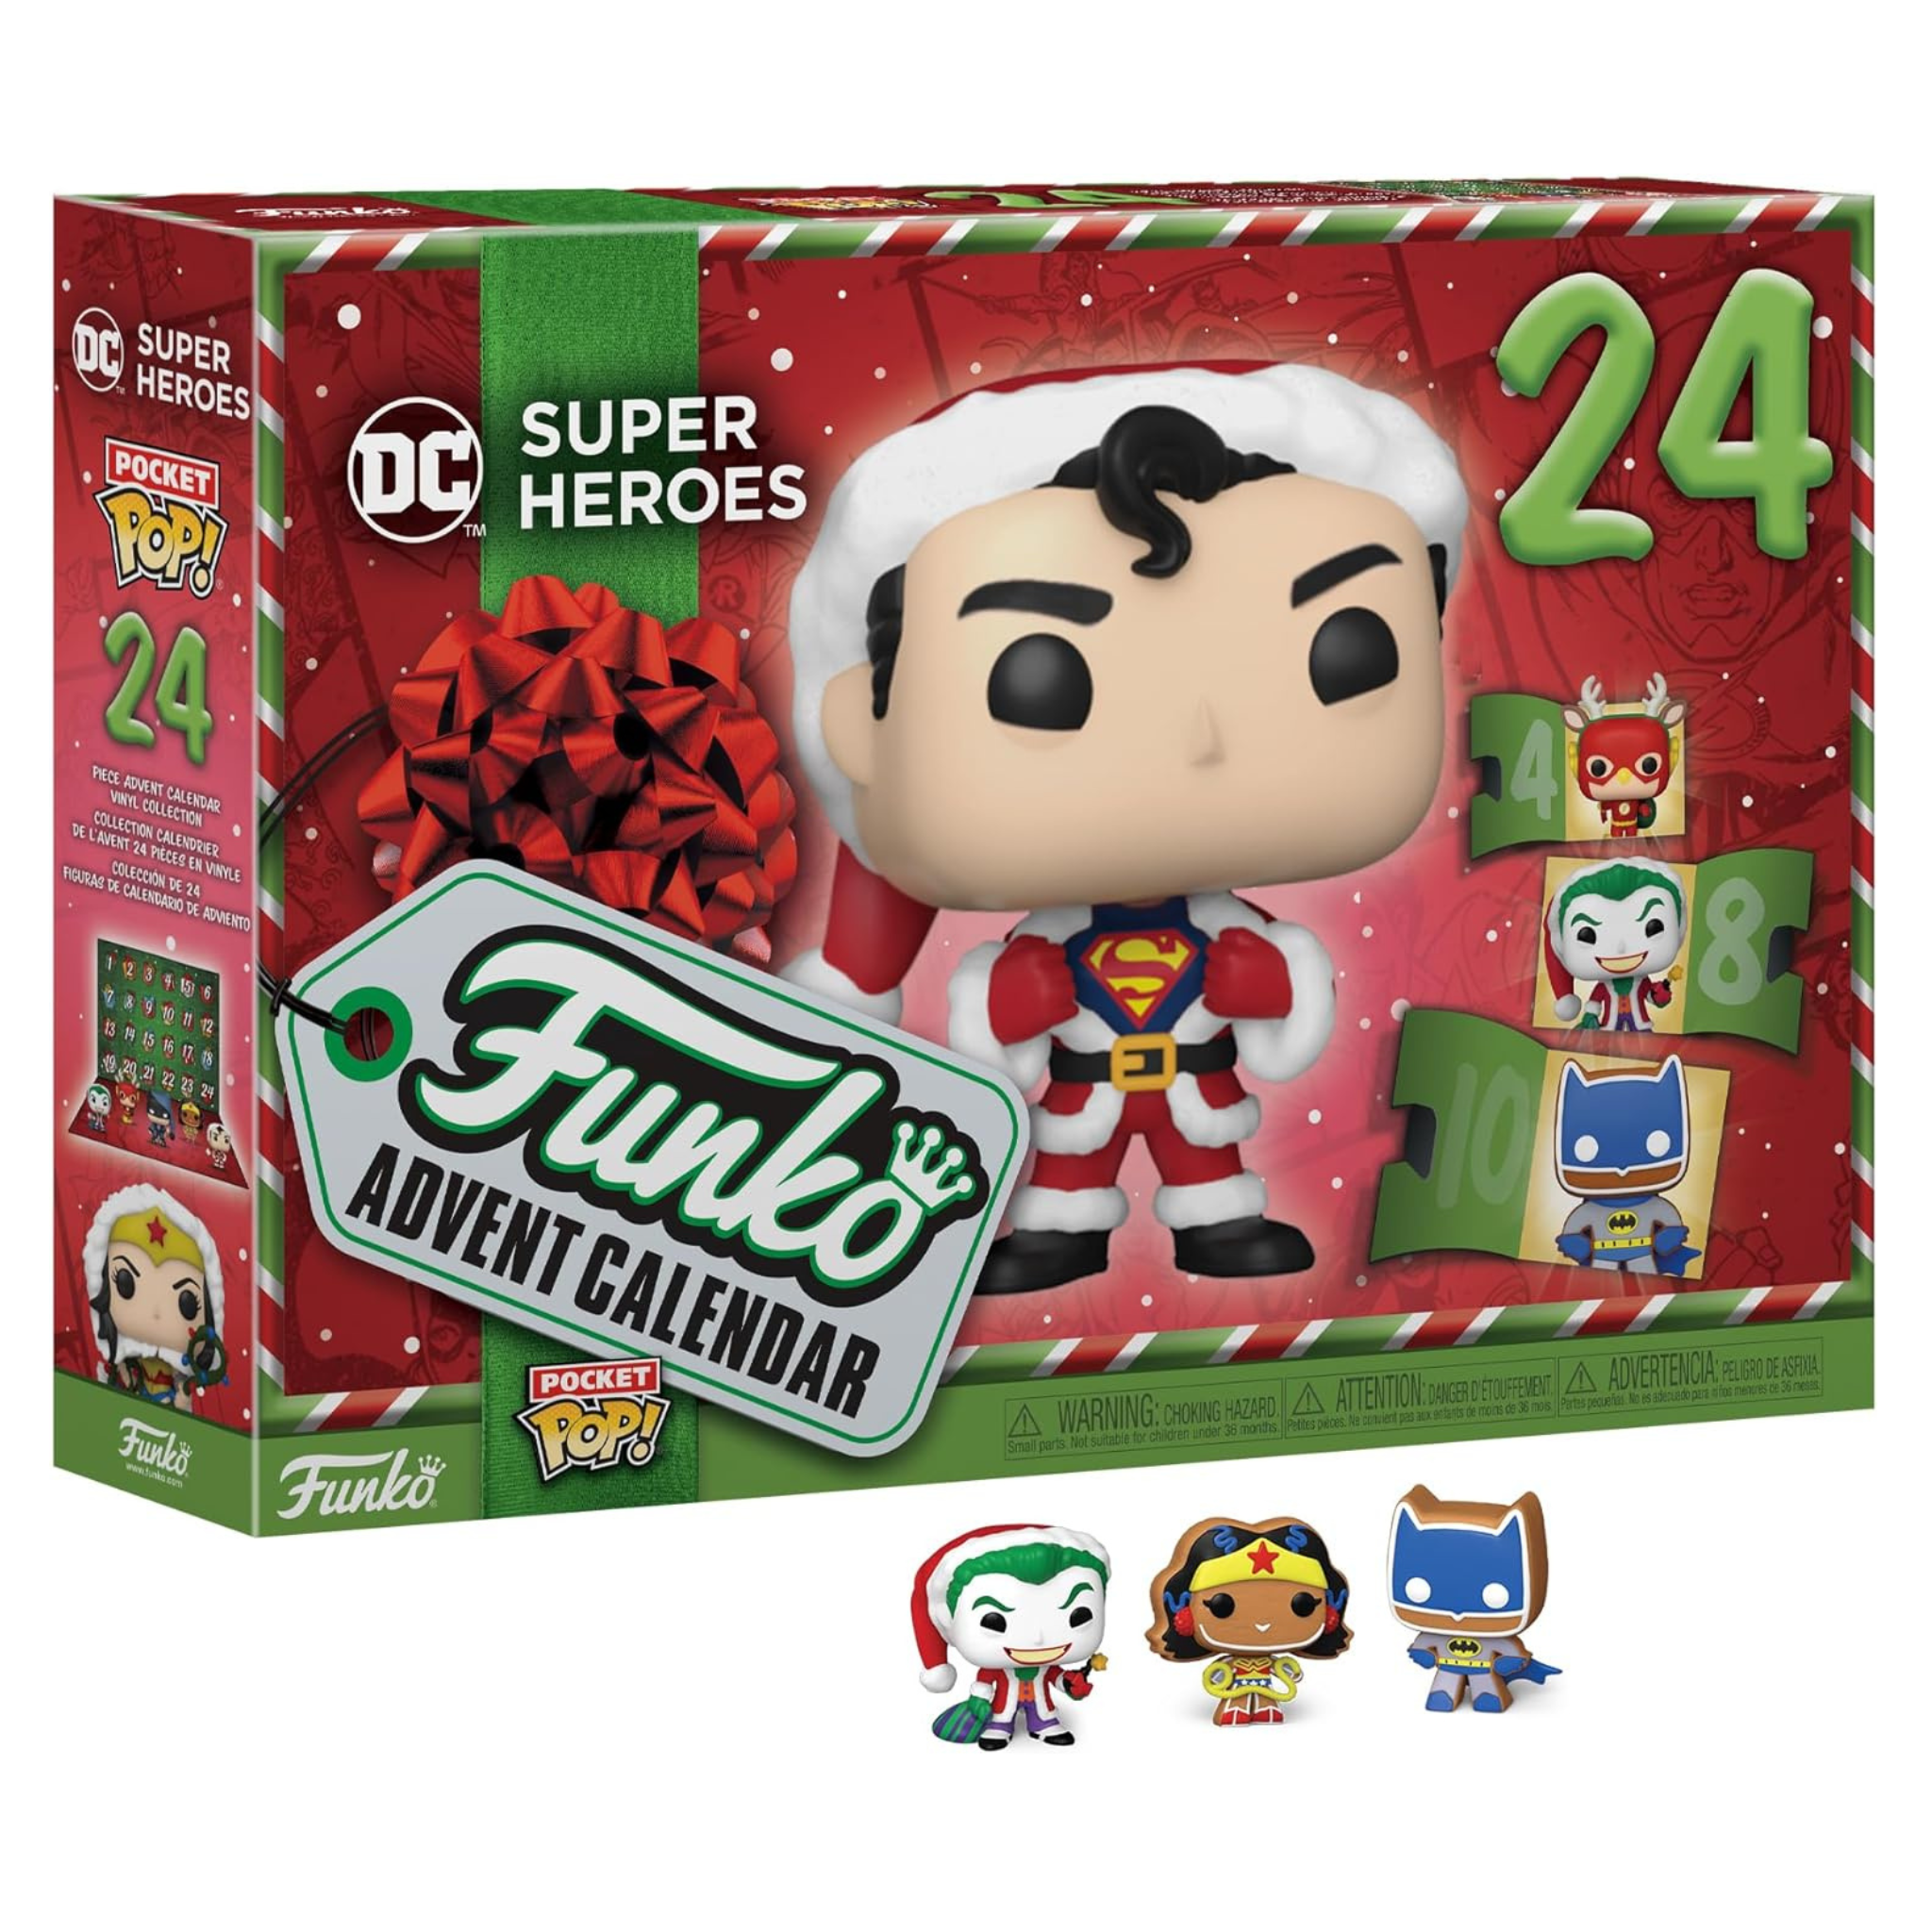 Funko Pop! DC Super Heroes Advent Calendar w/ 24 Pocket Pop! Vinyl Figures